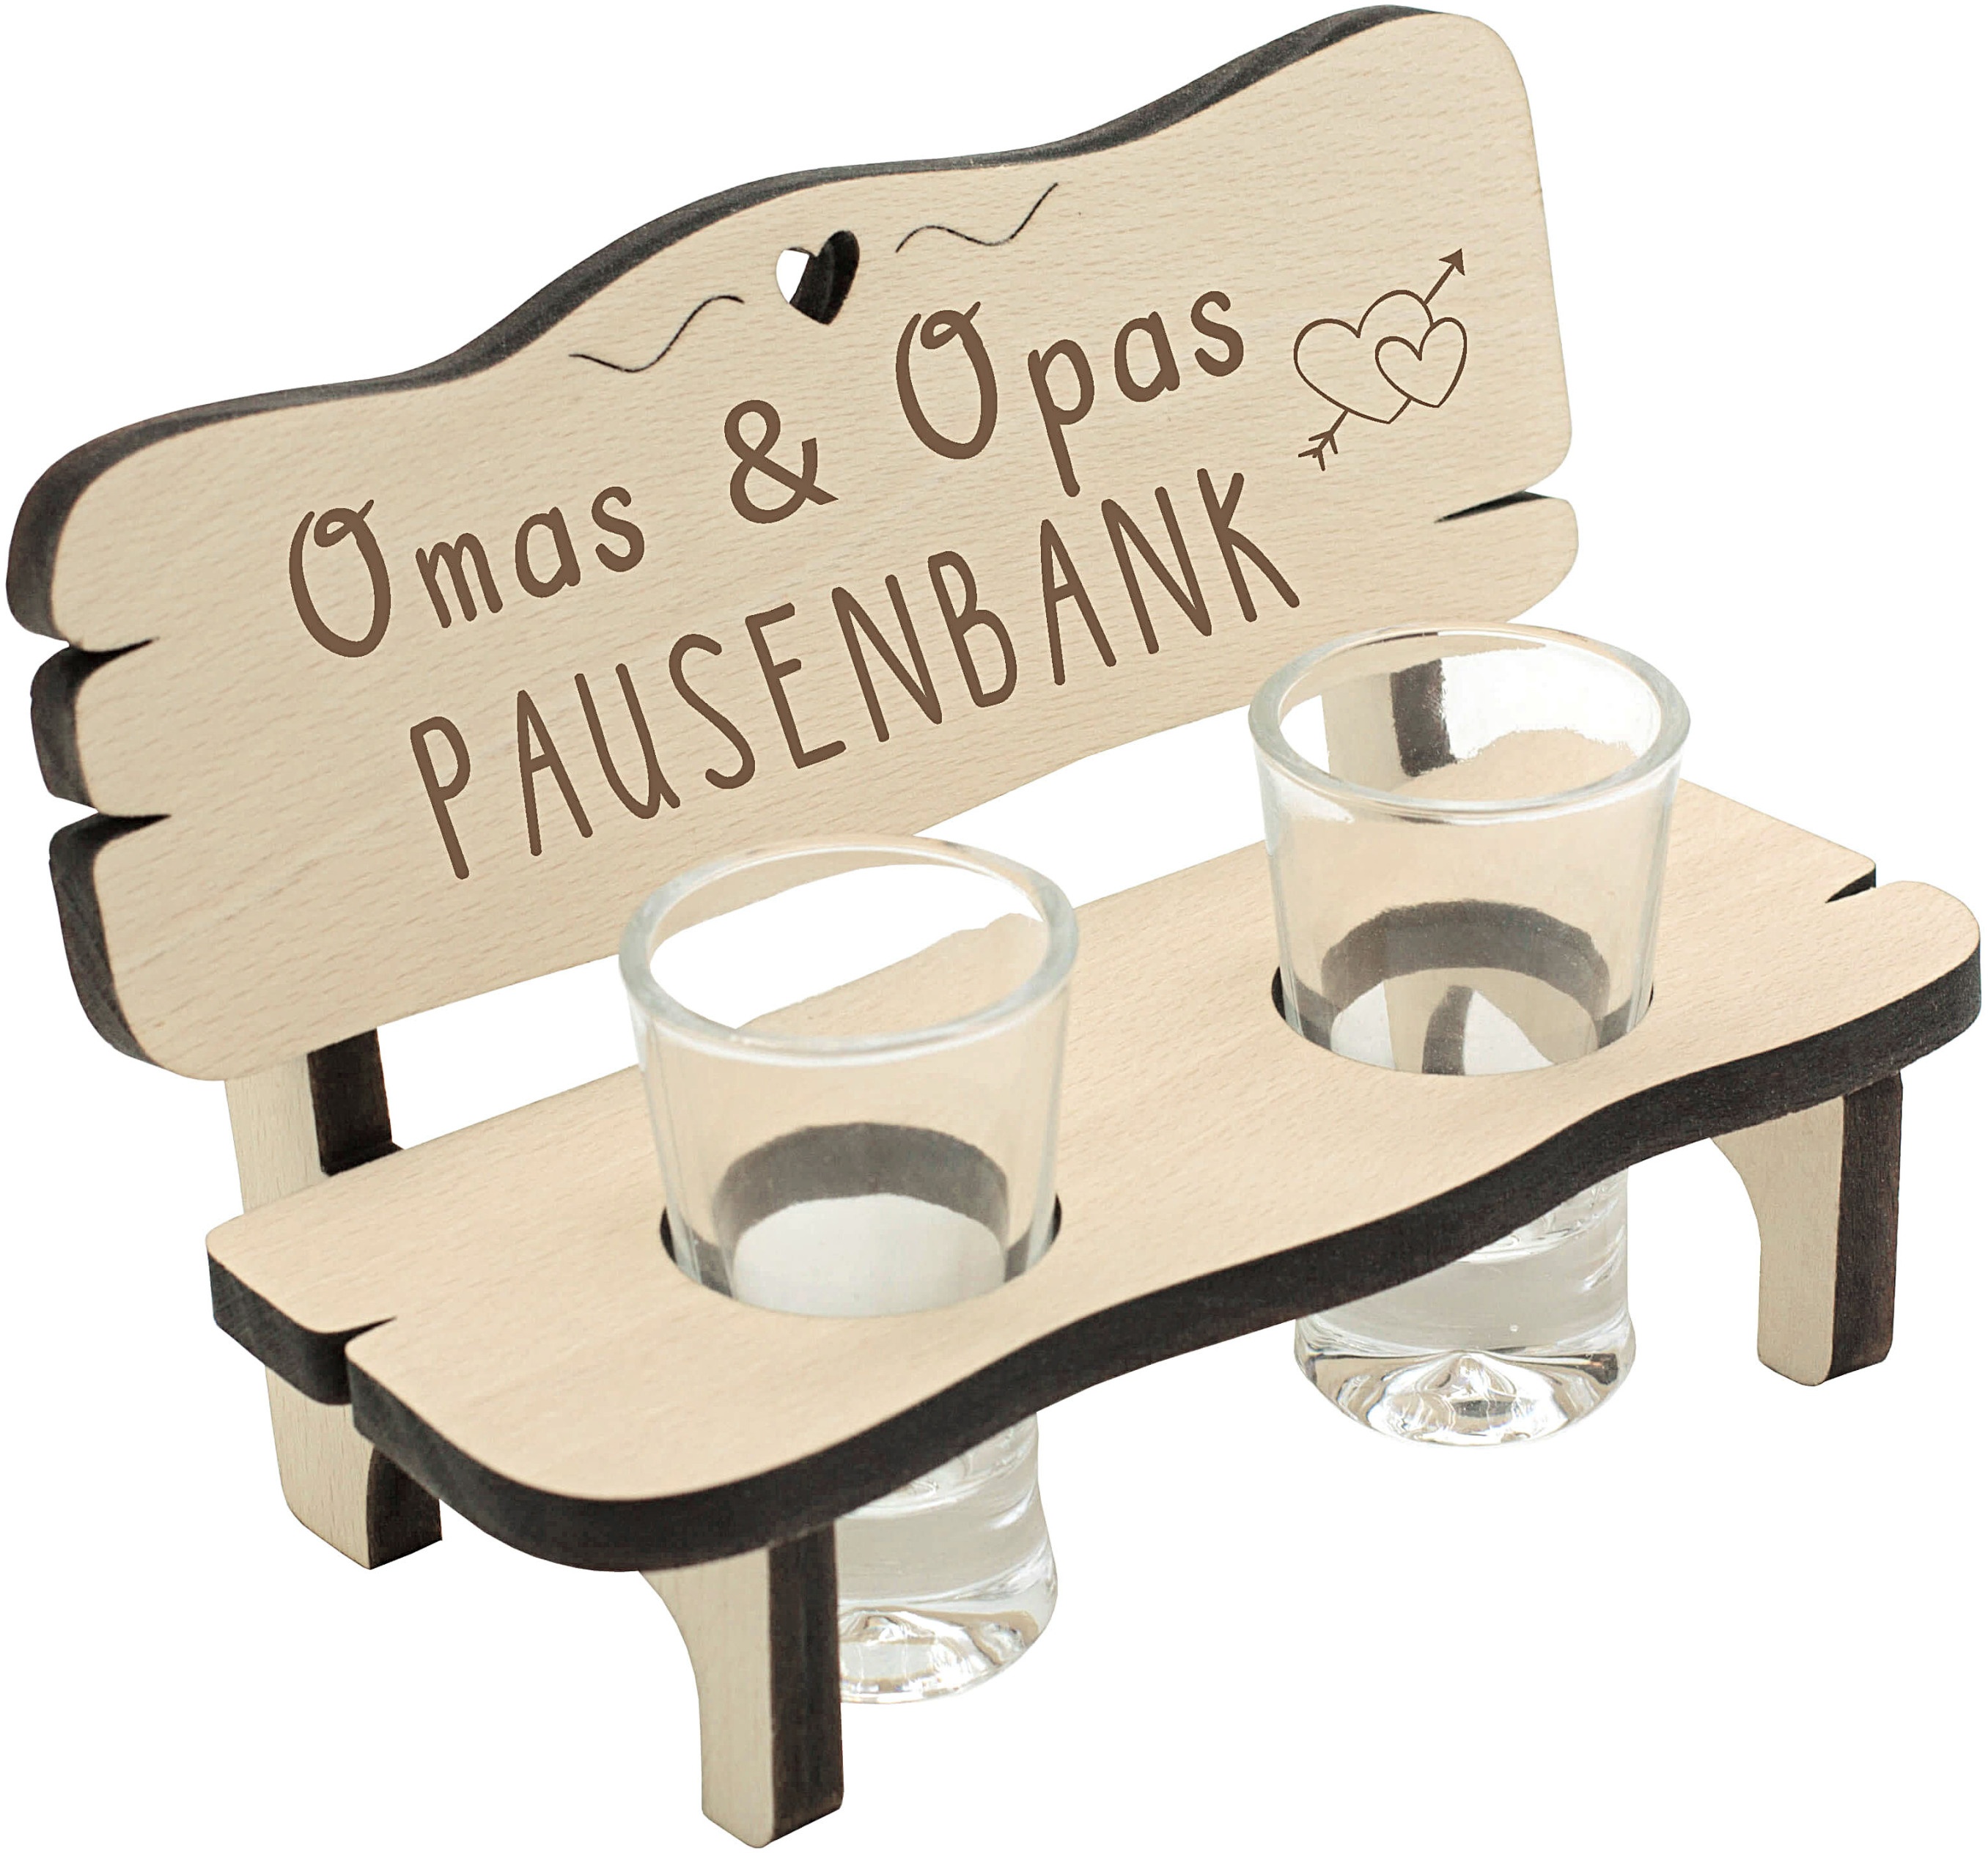 Schnapsbank "Omas & Opas Pausenbank"